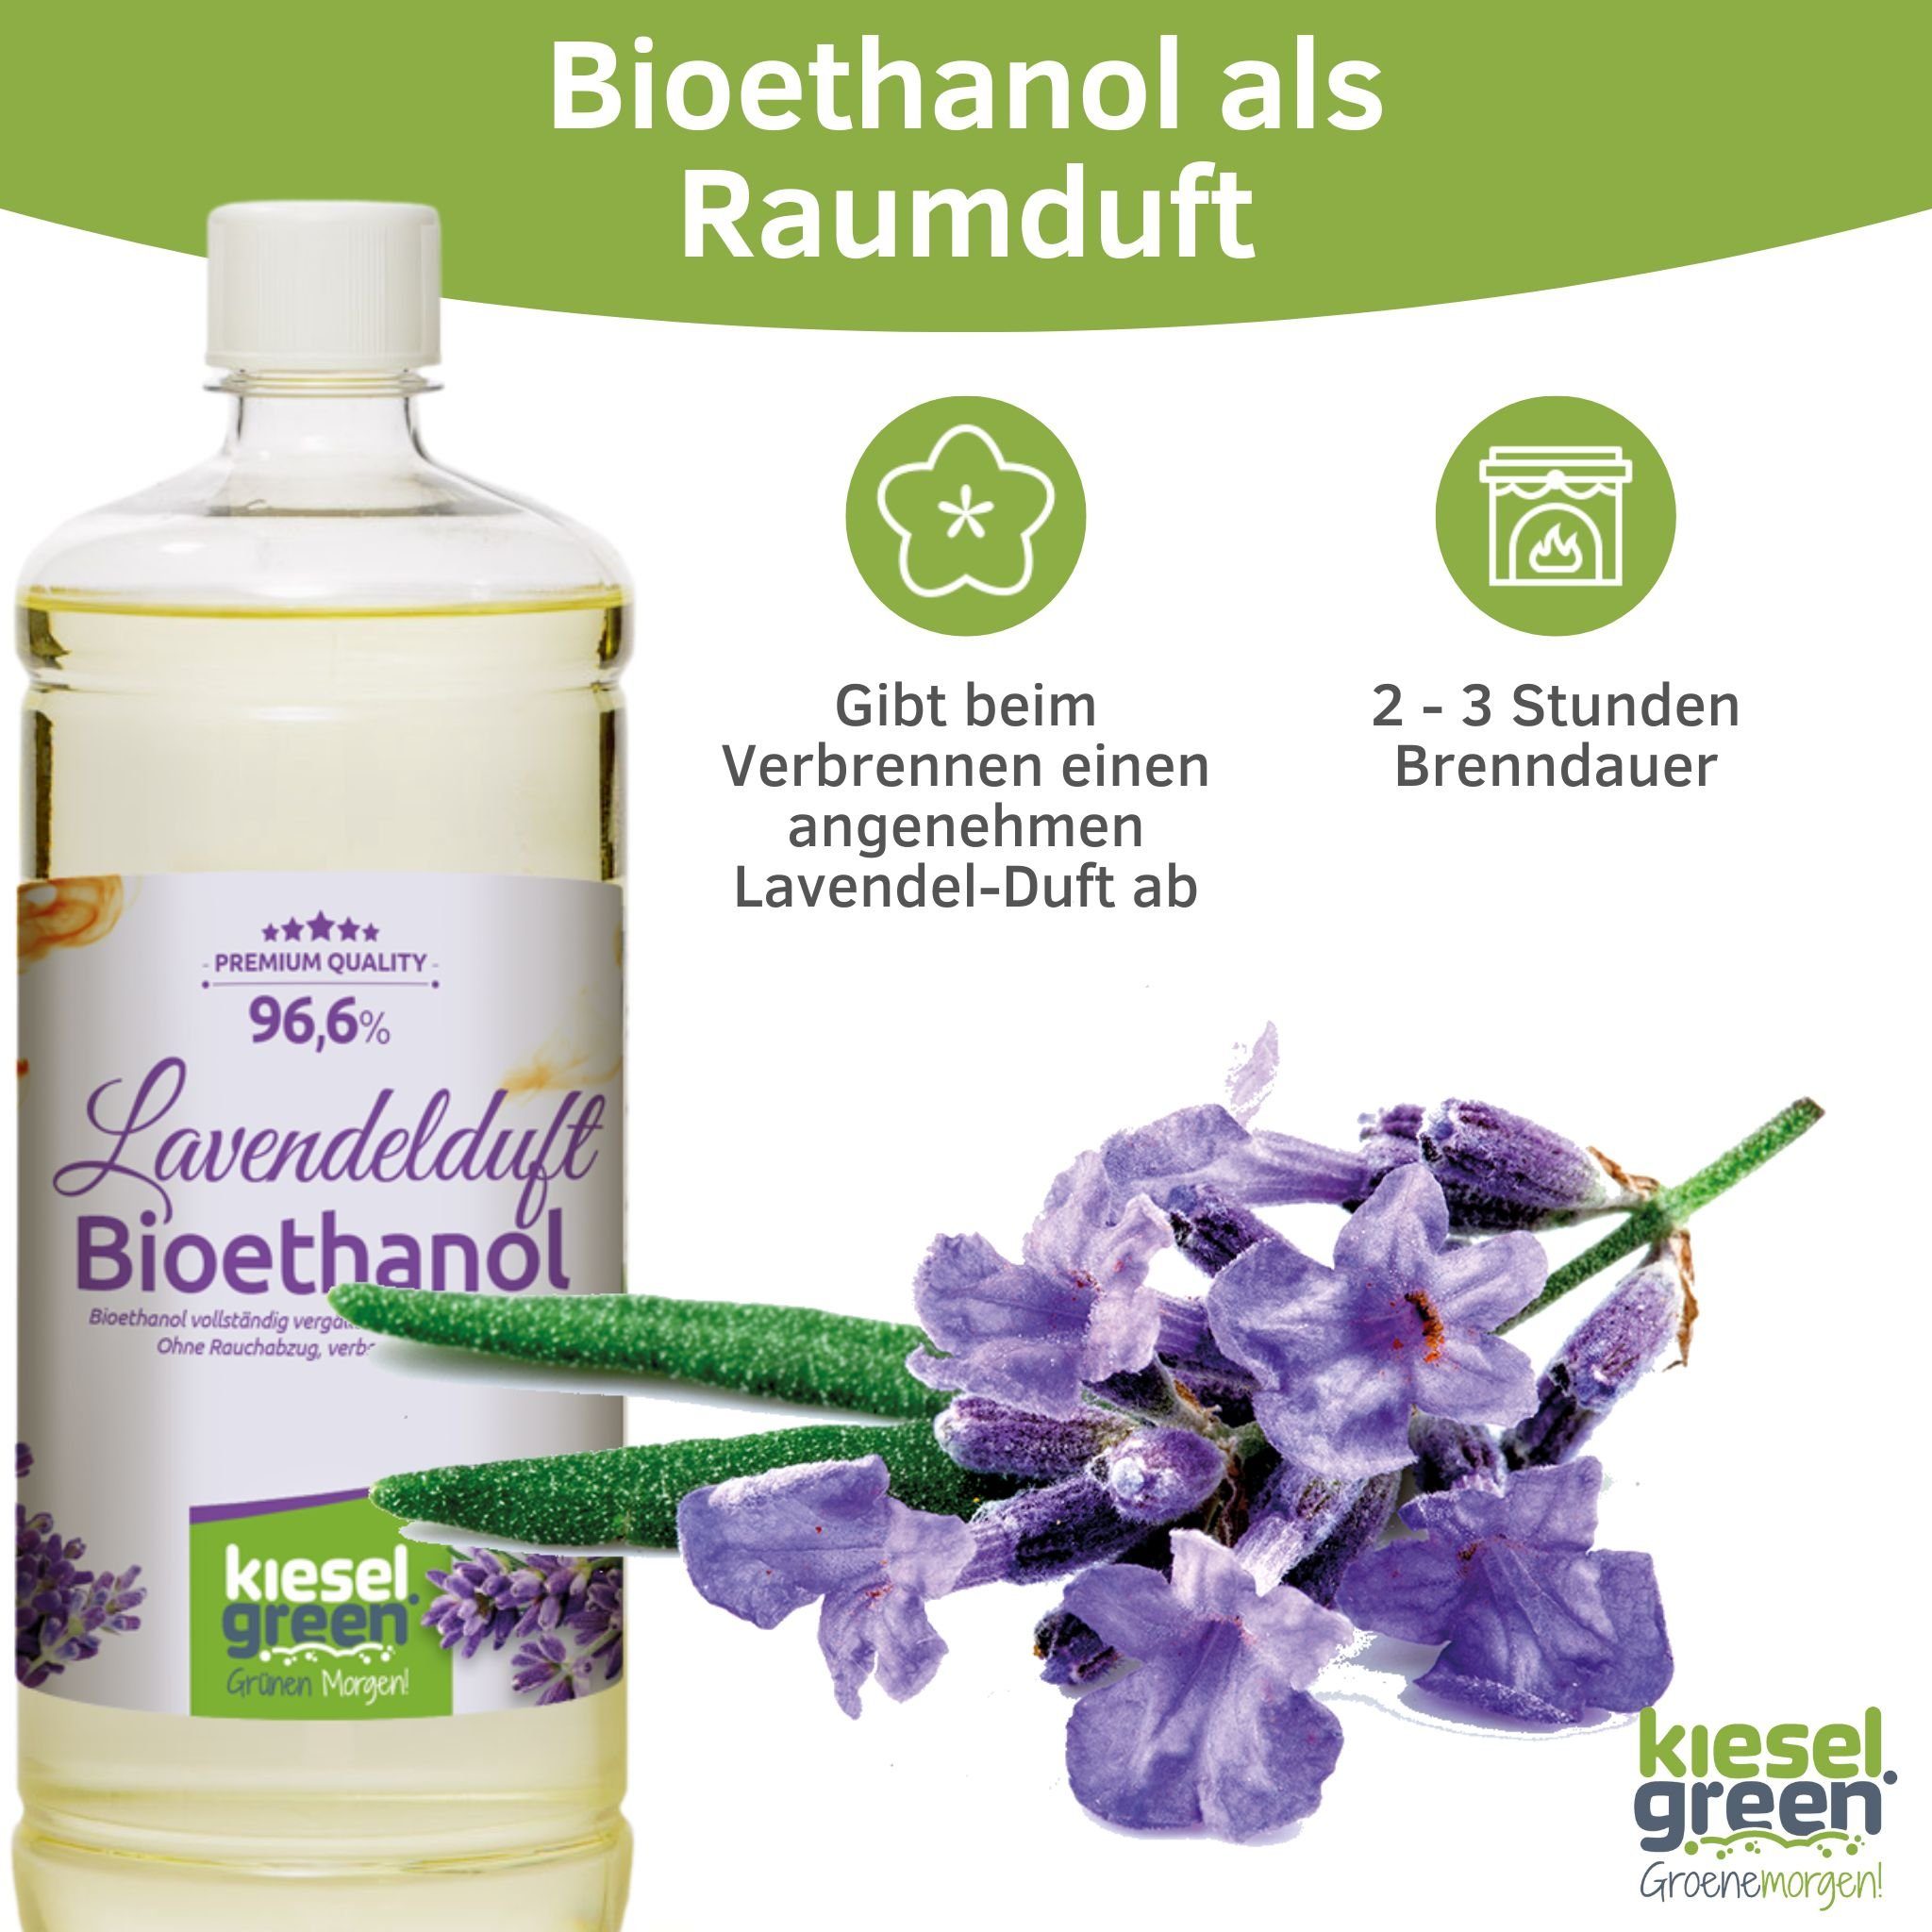 6x + KieselGreen Sets x Flasche KieselGreen Lavendelduft Bioethanol Bioethanol - Geruchlos 1 6x Liter 6x 12 6x +